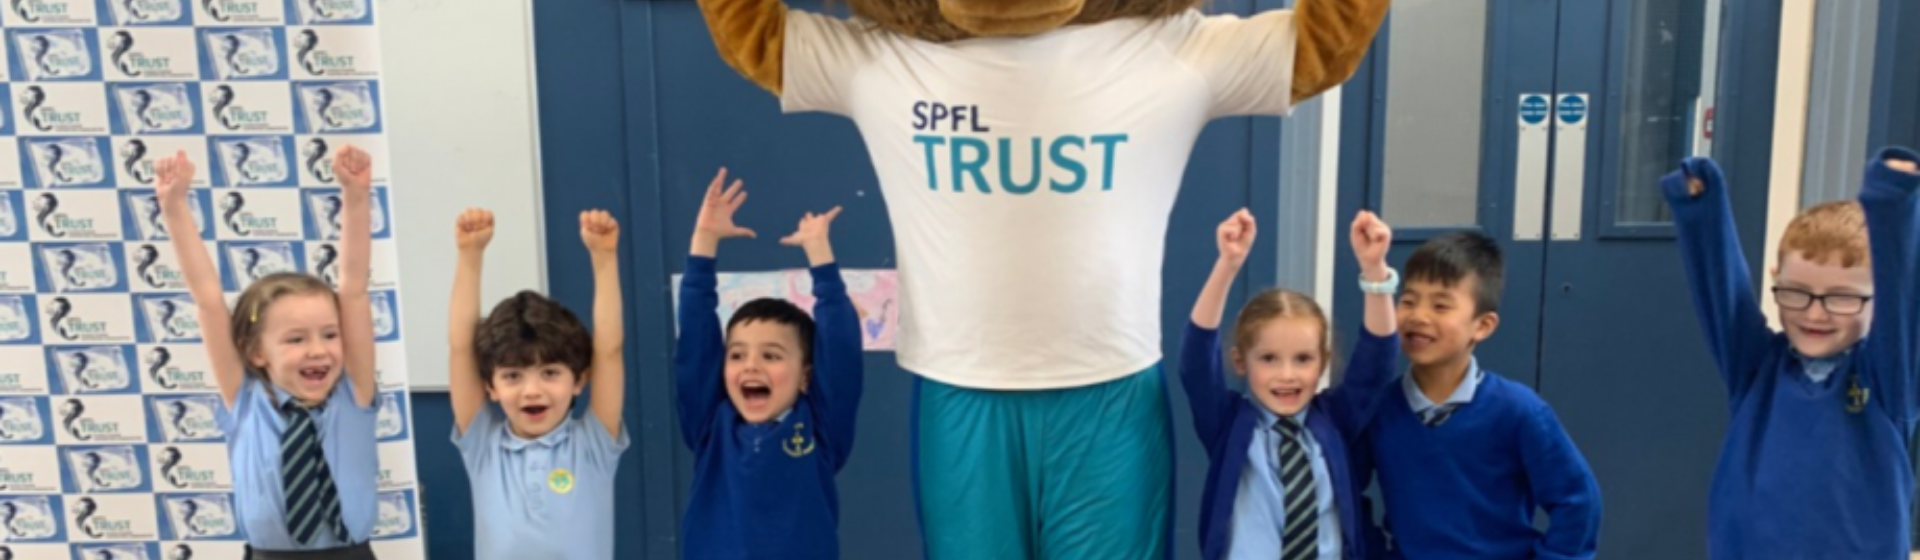 SPFL Trust header